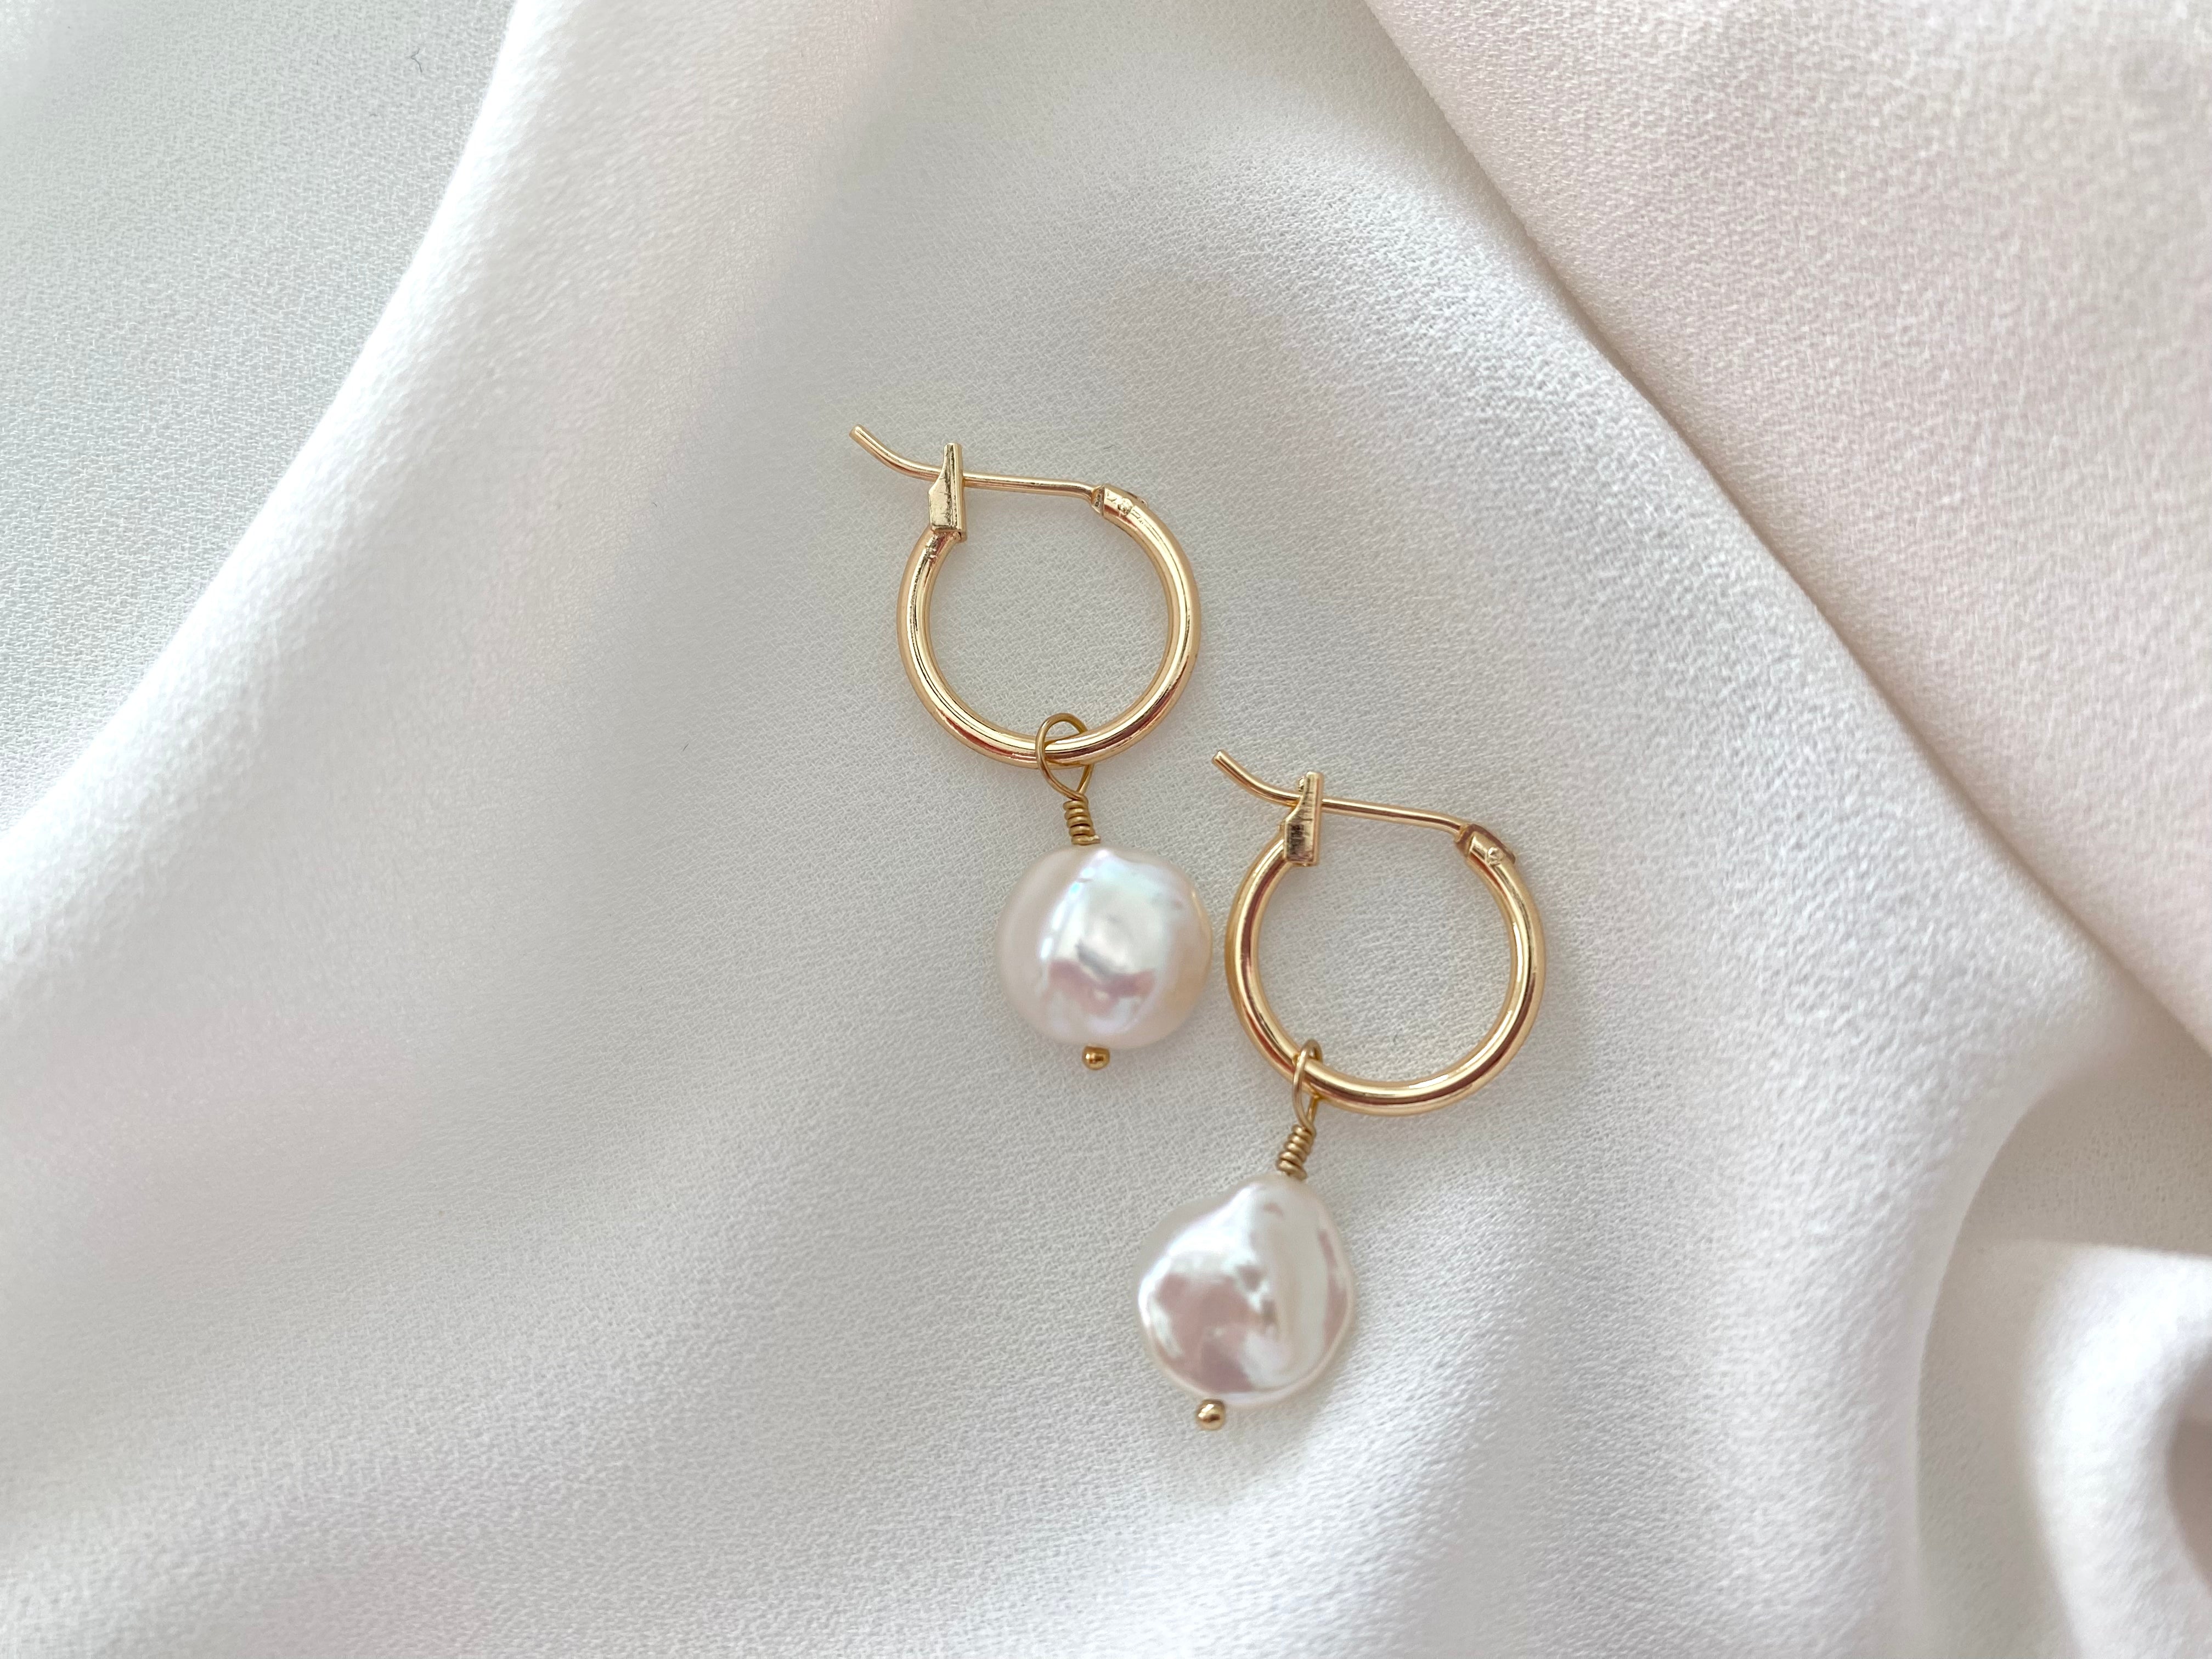 Gold Filled Hoop Earrings with Pearl Charms Dainty Gold Hoops Pearl Dangle Drop Earrings Modern Pearl Jewelry Minimalist 2 in 1 Earring Set